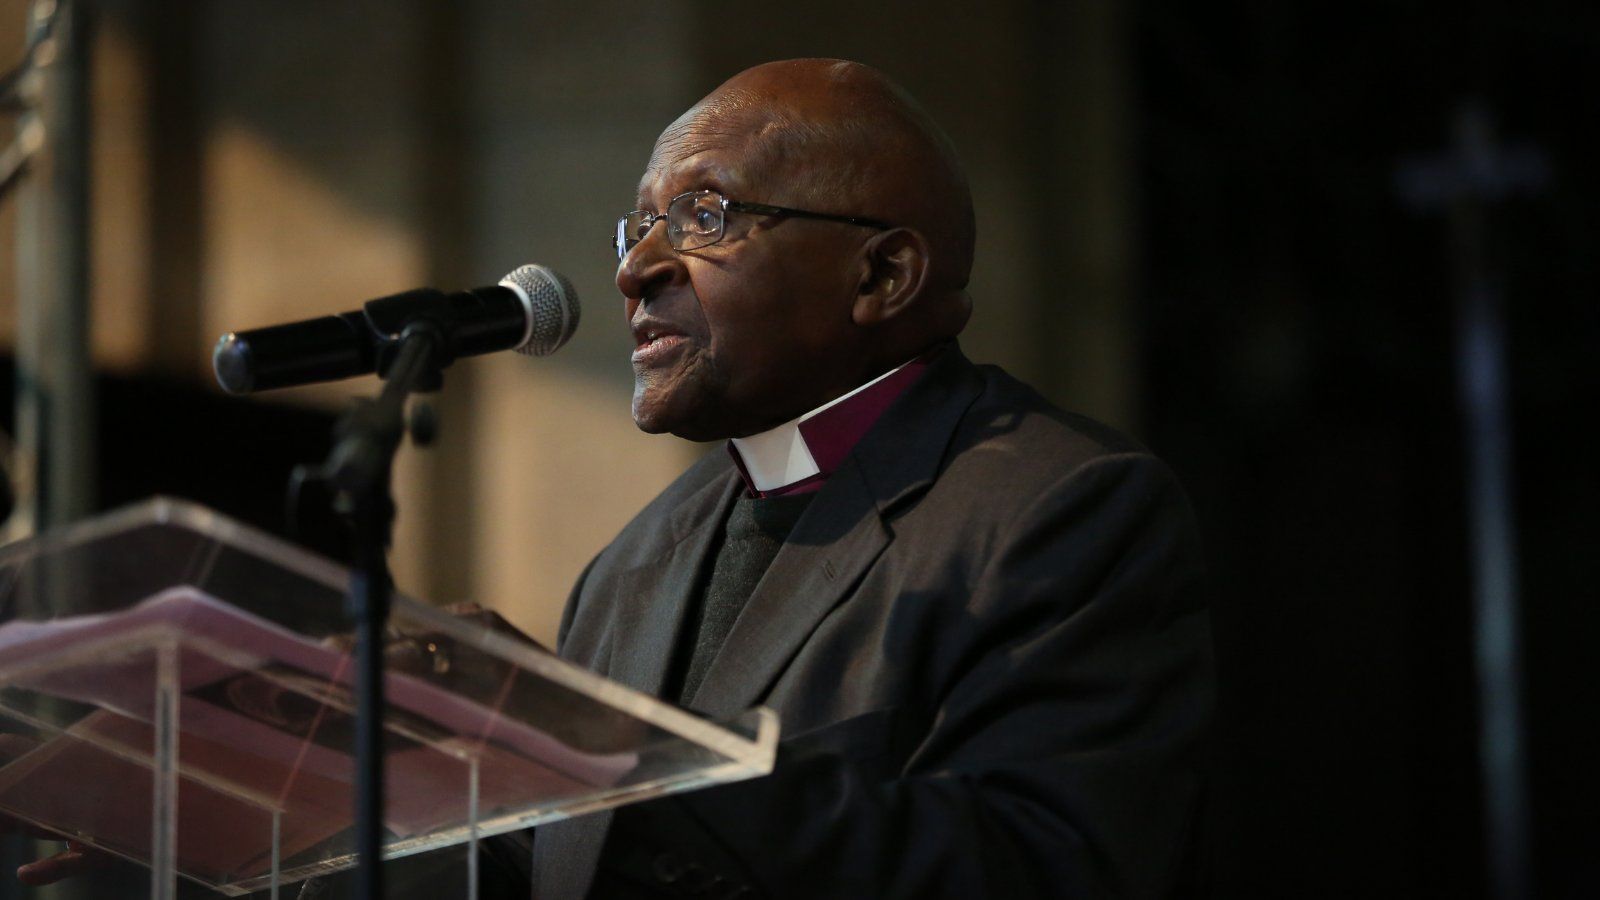 Aquamation: Desmond Tutu laid to rest through eco-friendly cremation method